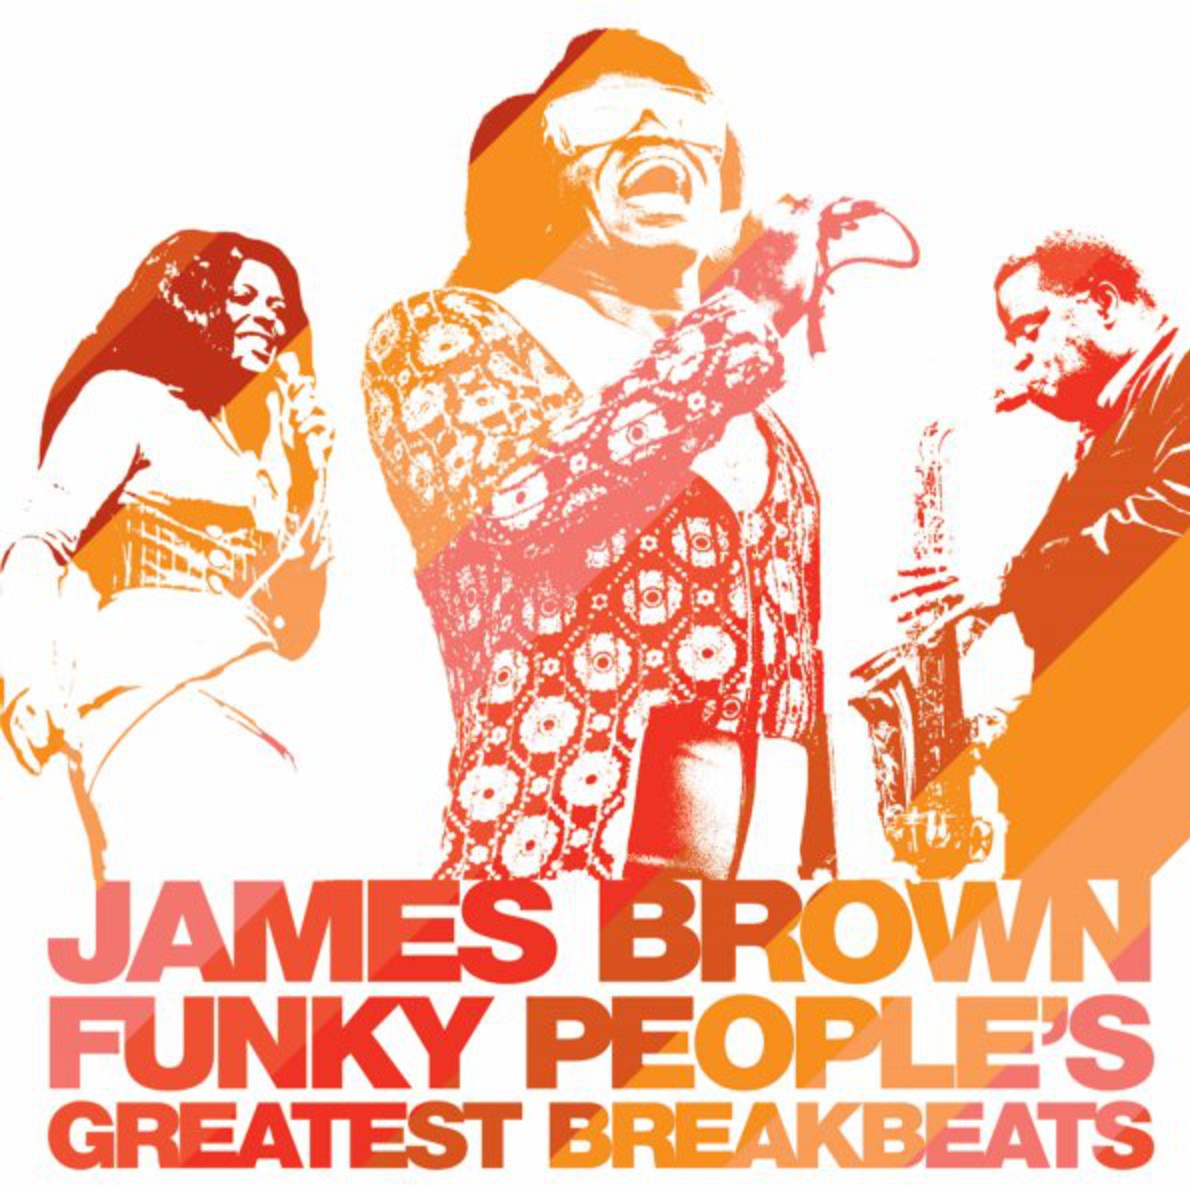 James Brown's Funky People's Greatest Breakbeats